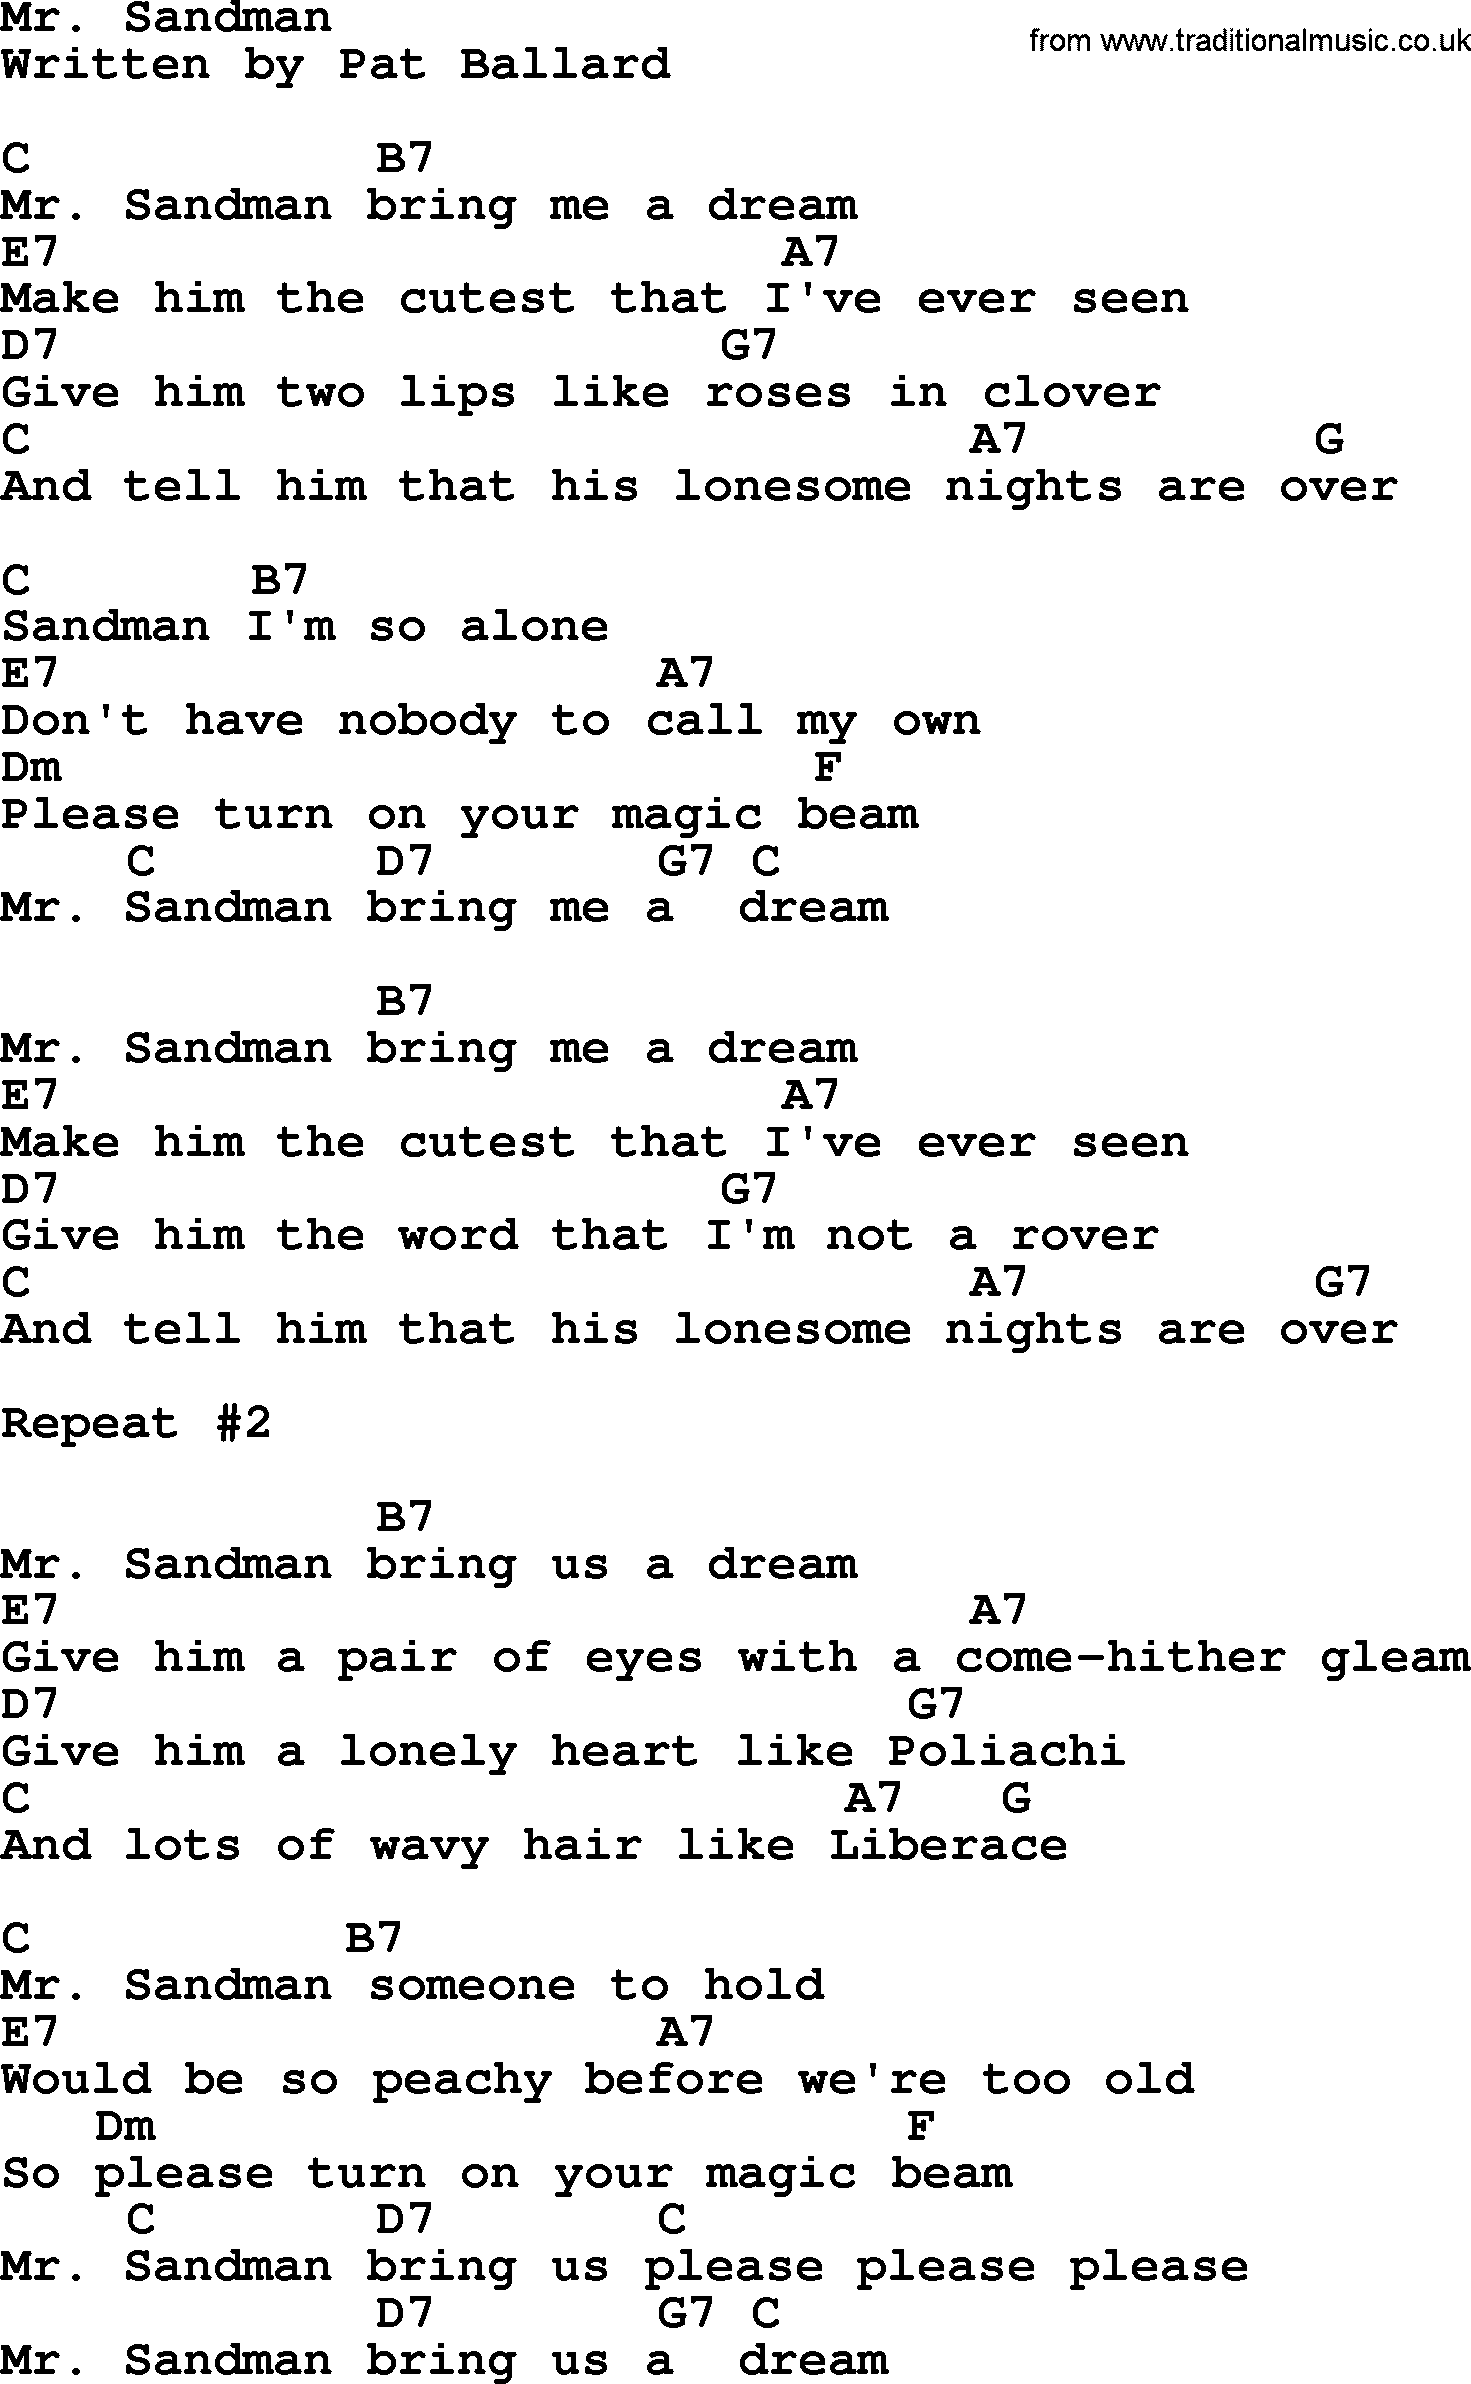 Dolly Parton song Mr. Sandman, lyrics and chords